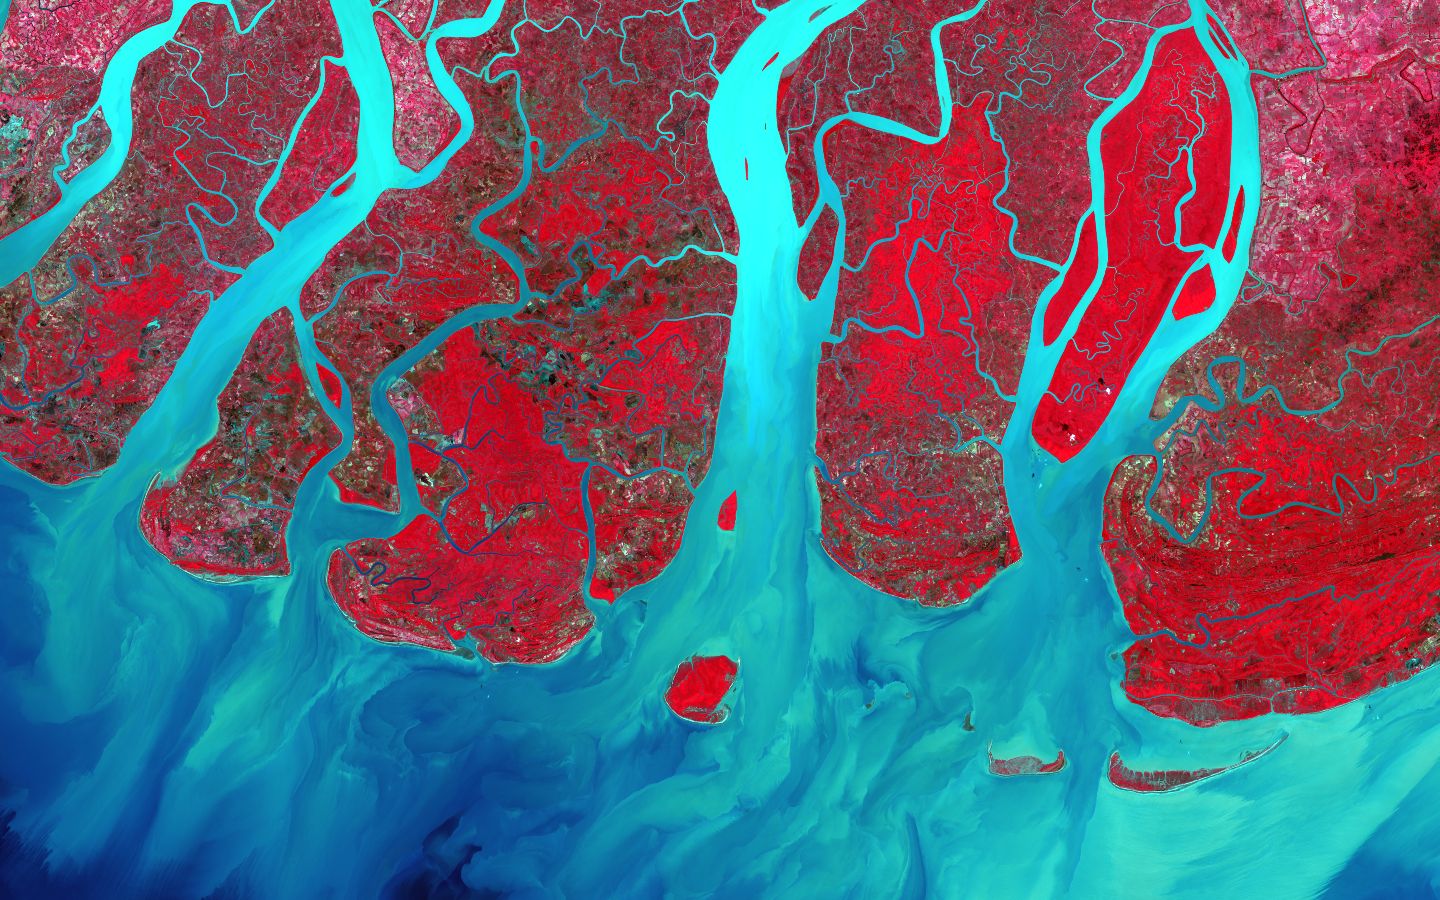 Irrawaddy River Delta, Myanmar